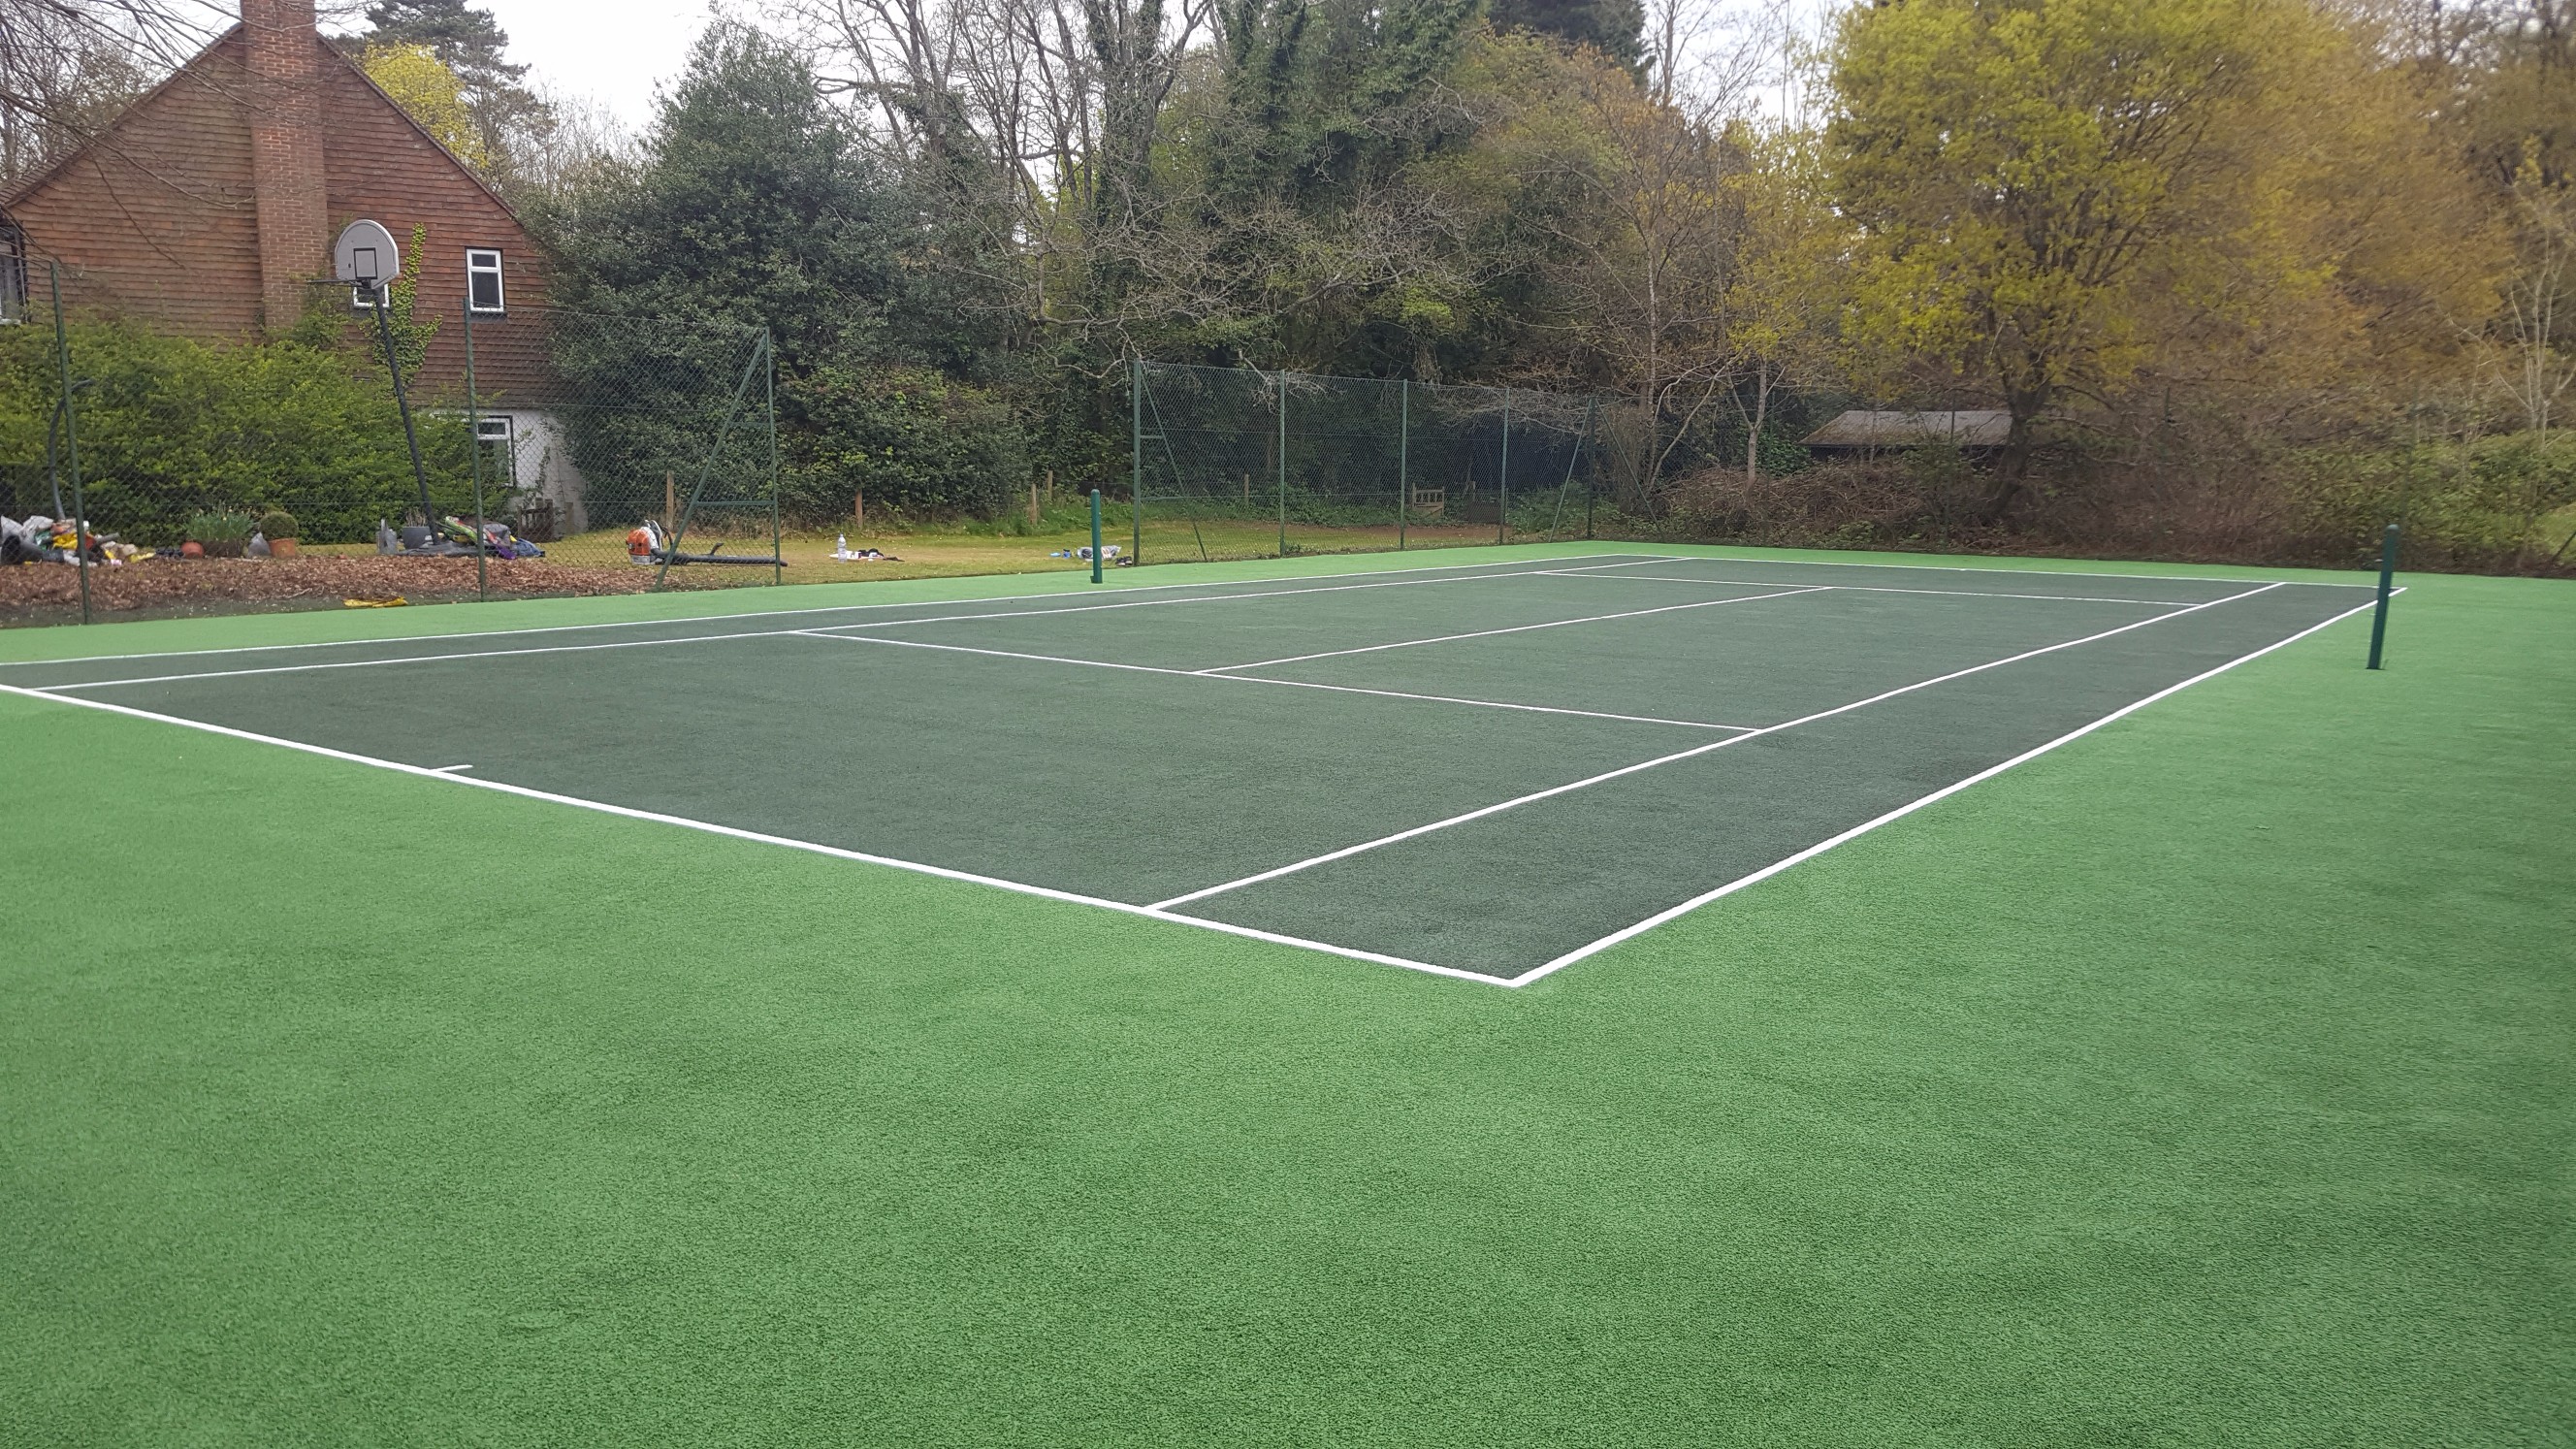 Tennis Court Renovation | Renovate Existing Tennis Courts